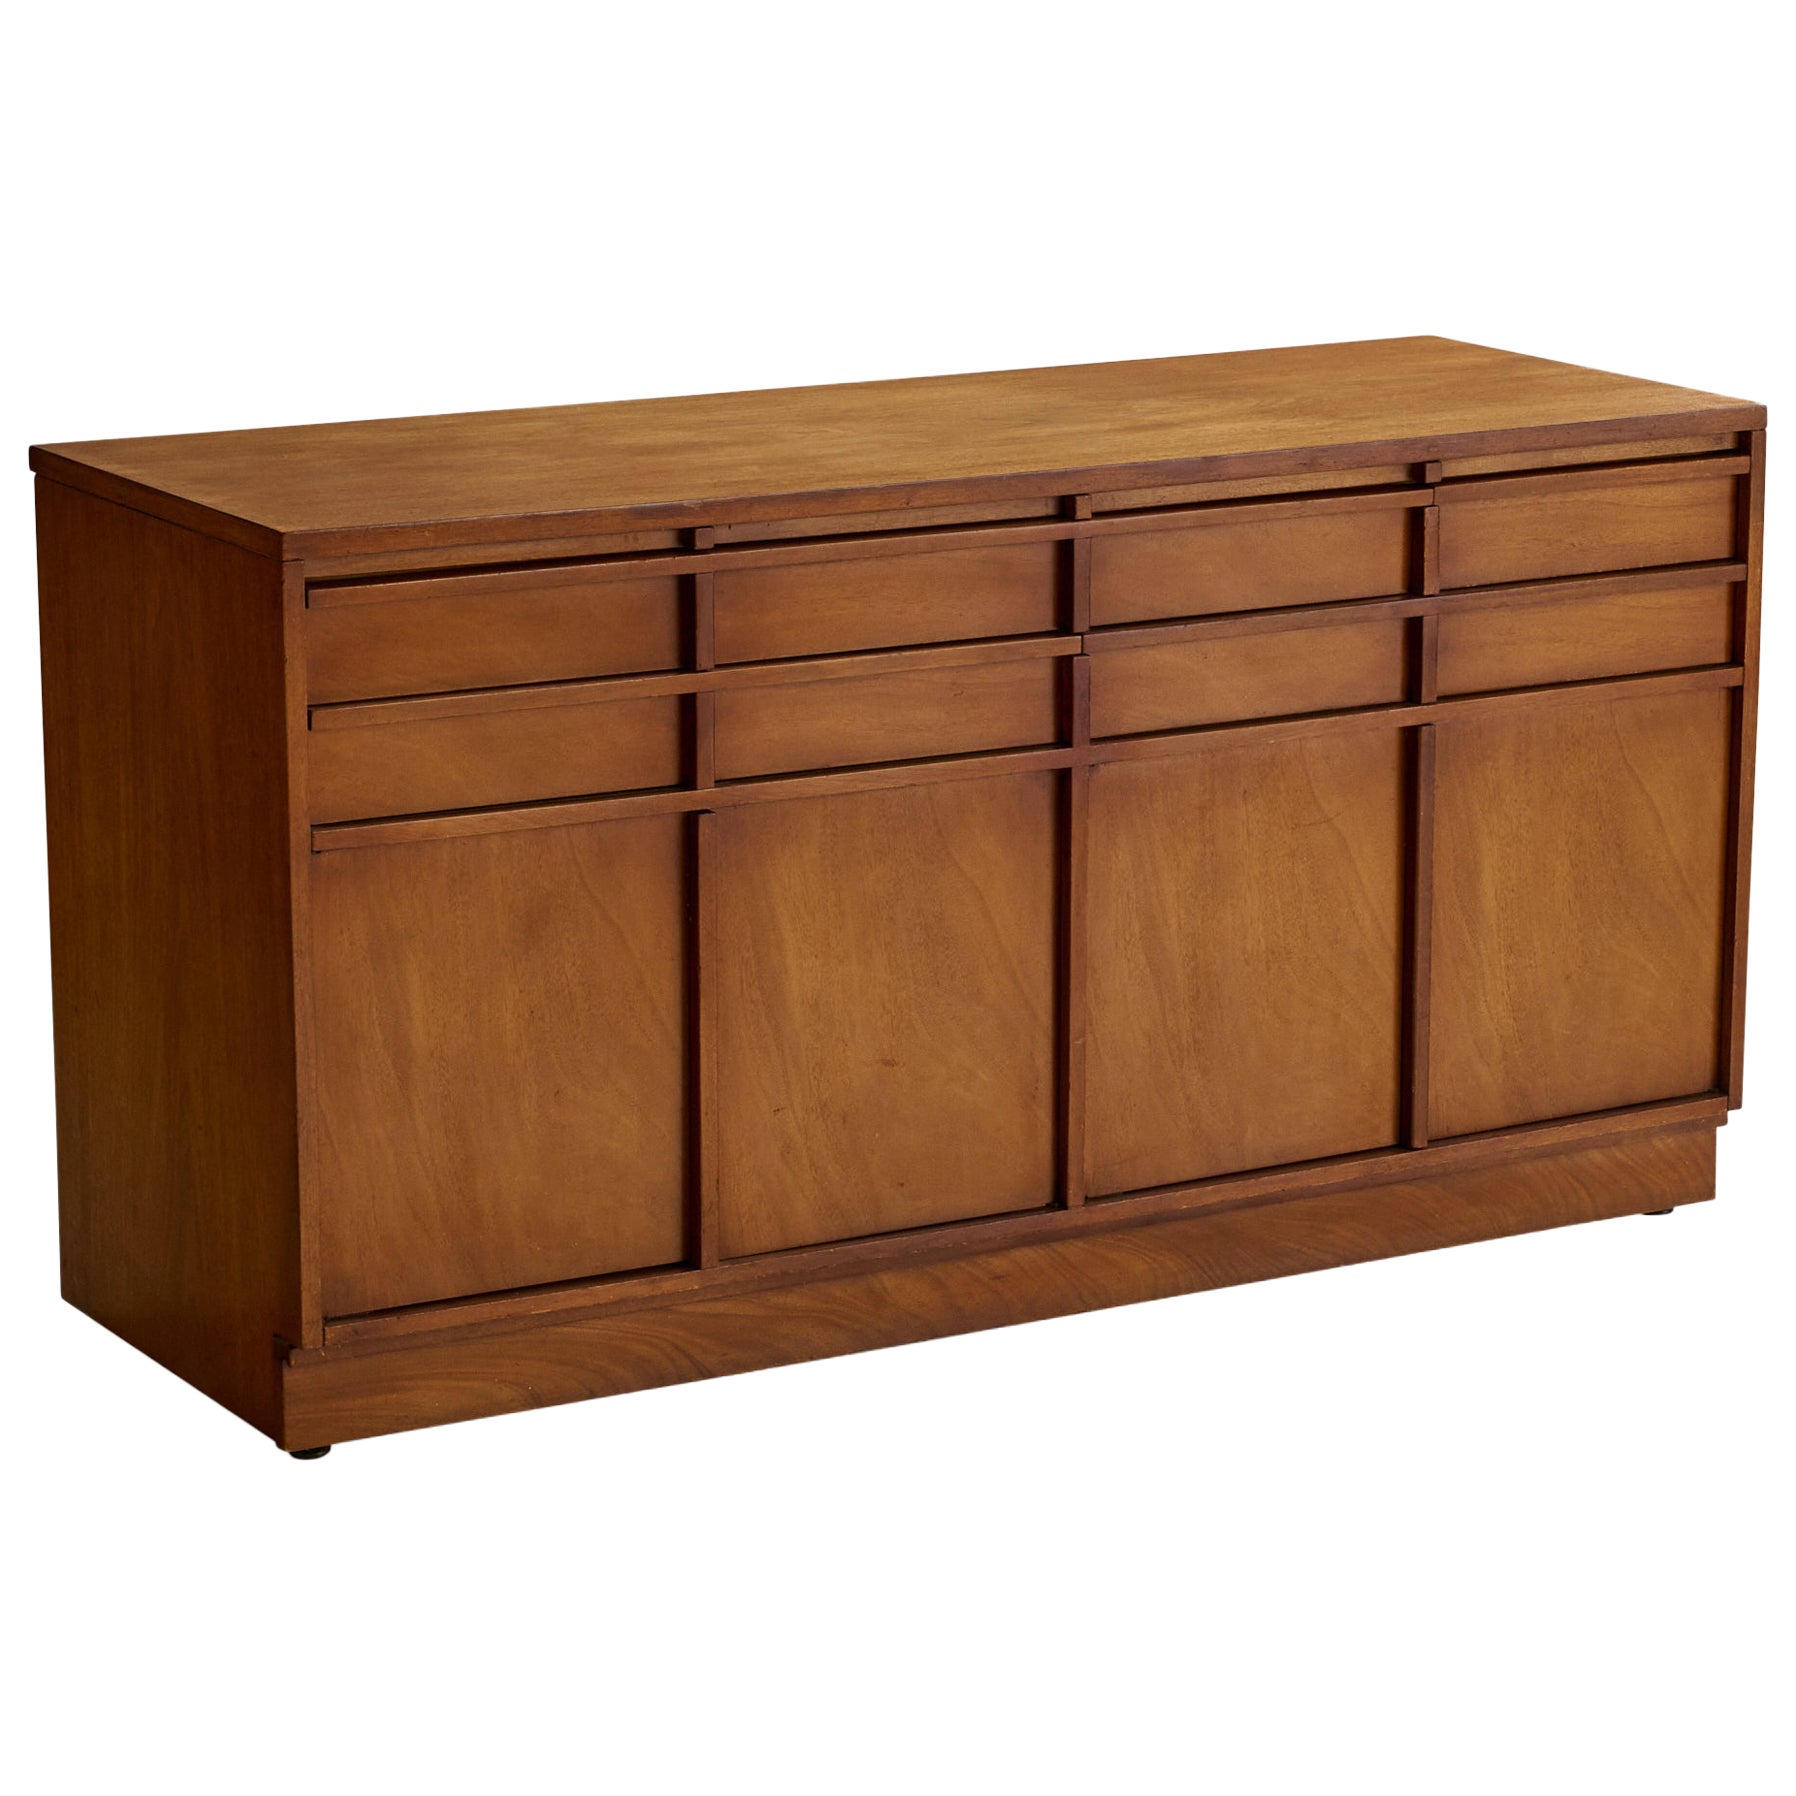 Sligh Furniture, Cabinet, Maple, USA, 1950s For Sale